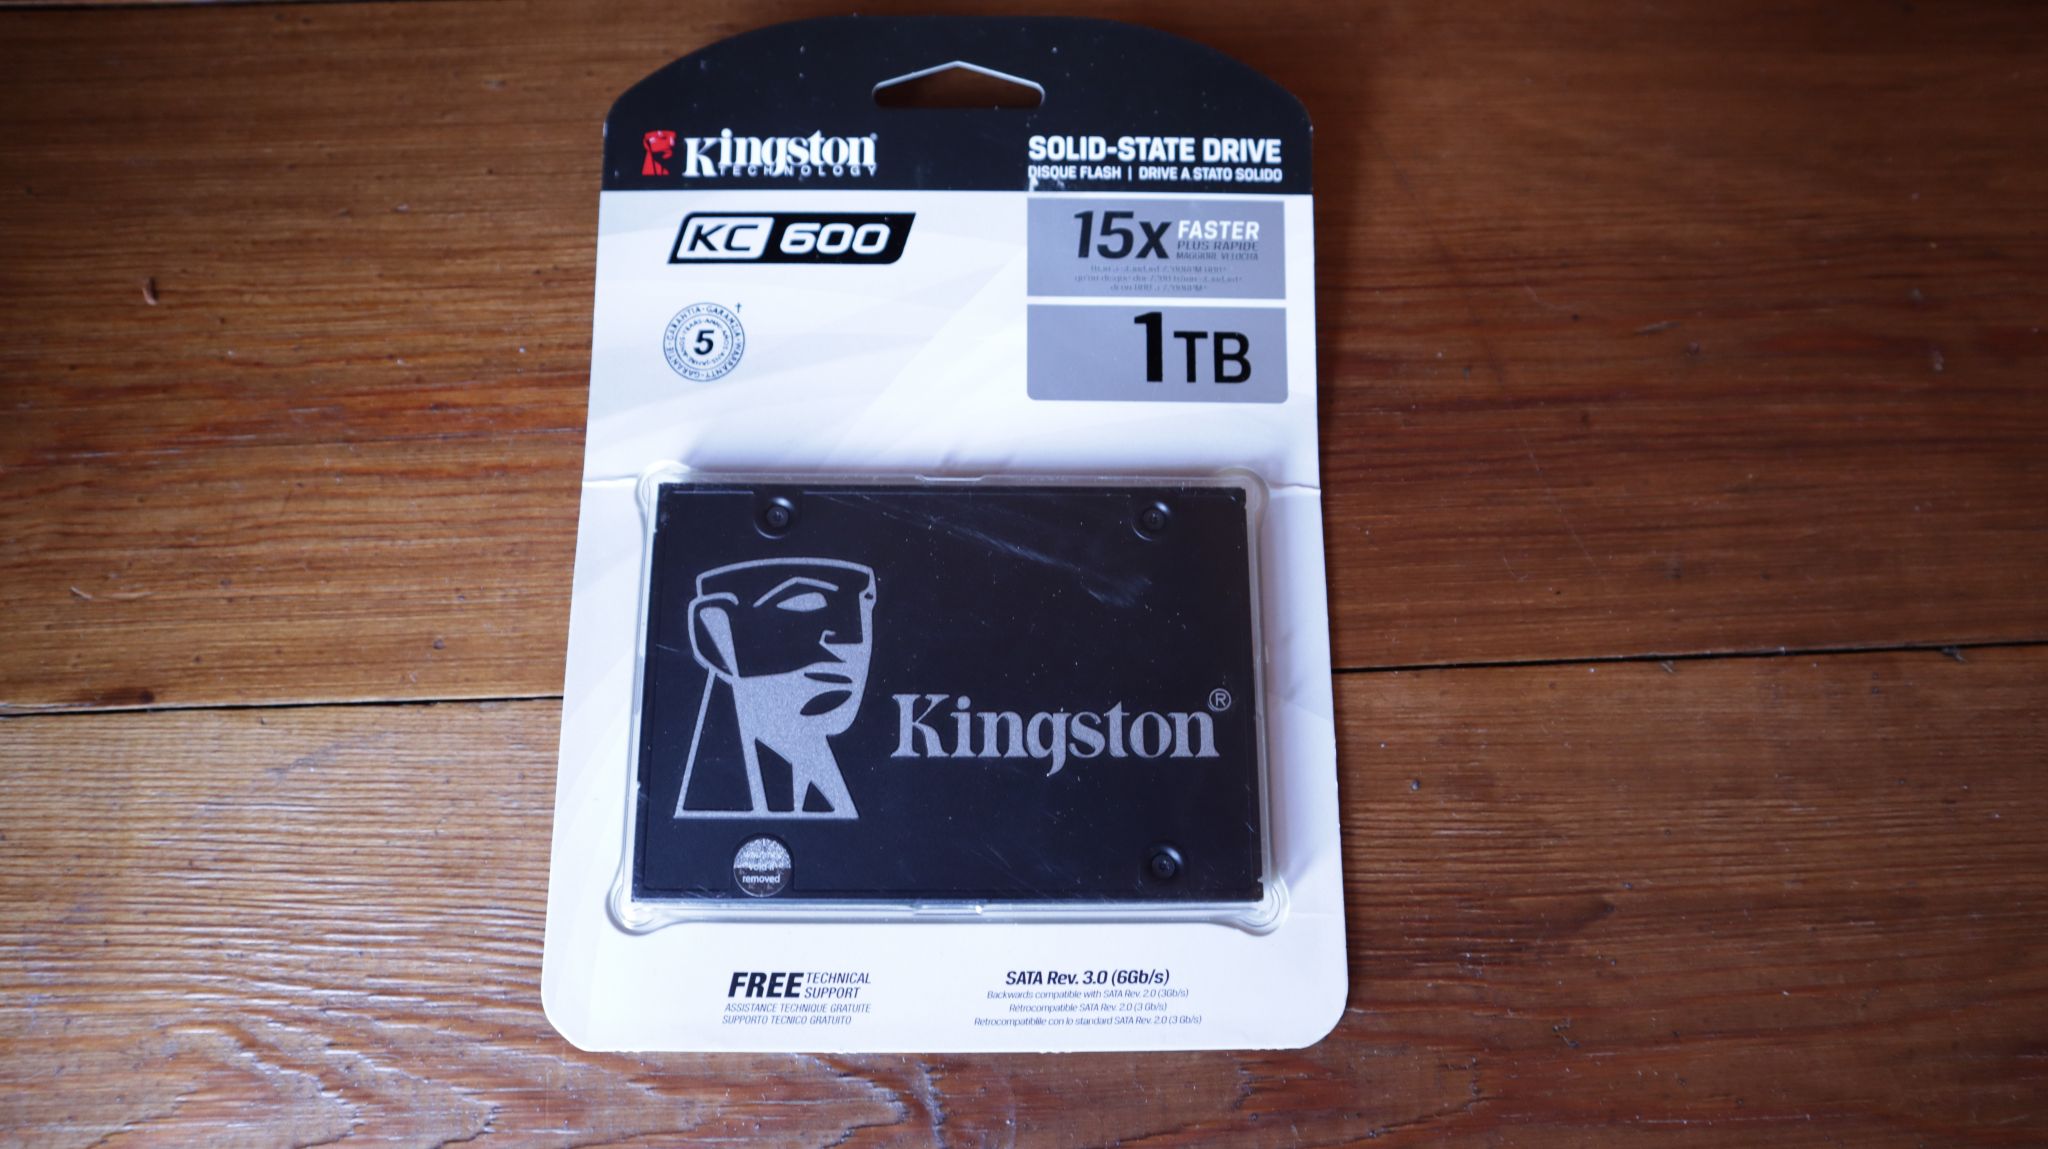 1024g SSD kc600 sata3 2.5. 1024 ГБ 2.5" SATA накопитель Kingston kc600 [skc600/1024g]. SSD Kingston kc600 skc600. Твердотельный накопитель Kingston skc600b/1024g. 11 гб 1024